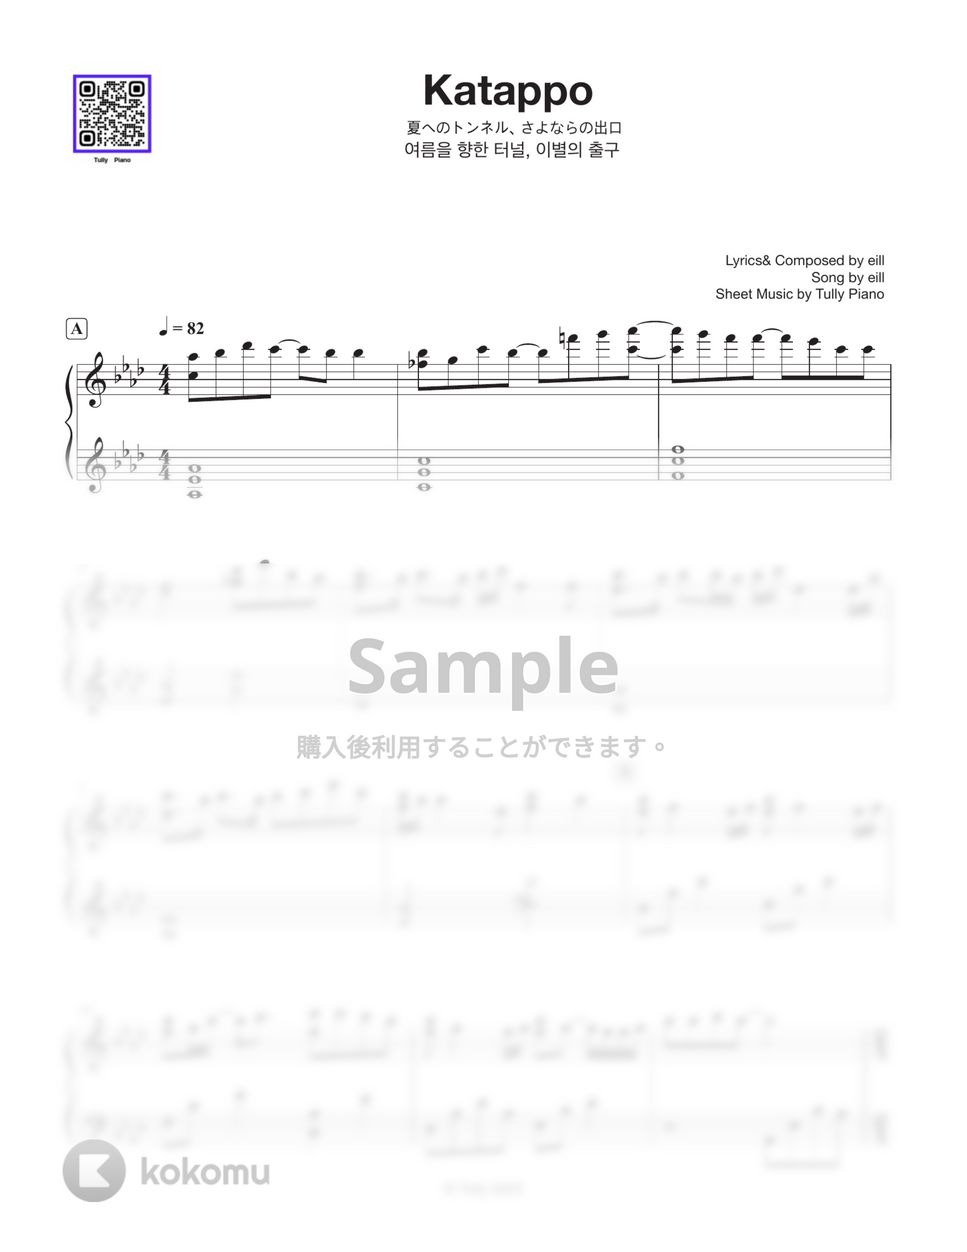 eill - 片っぽ (Full+易しくて短い ver。) by Tully Piano